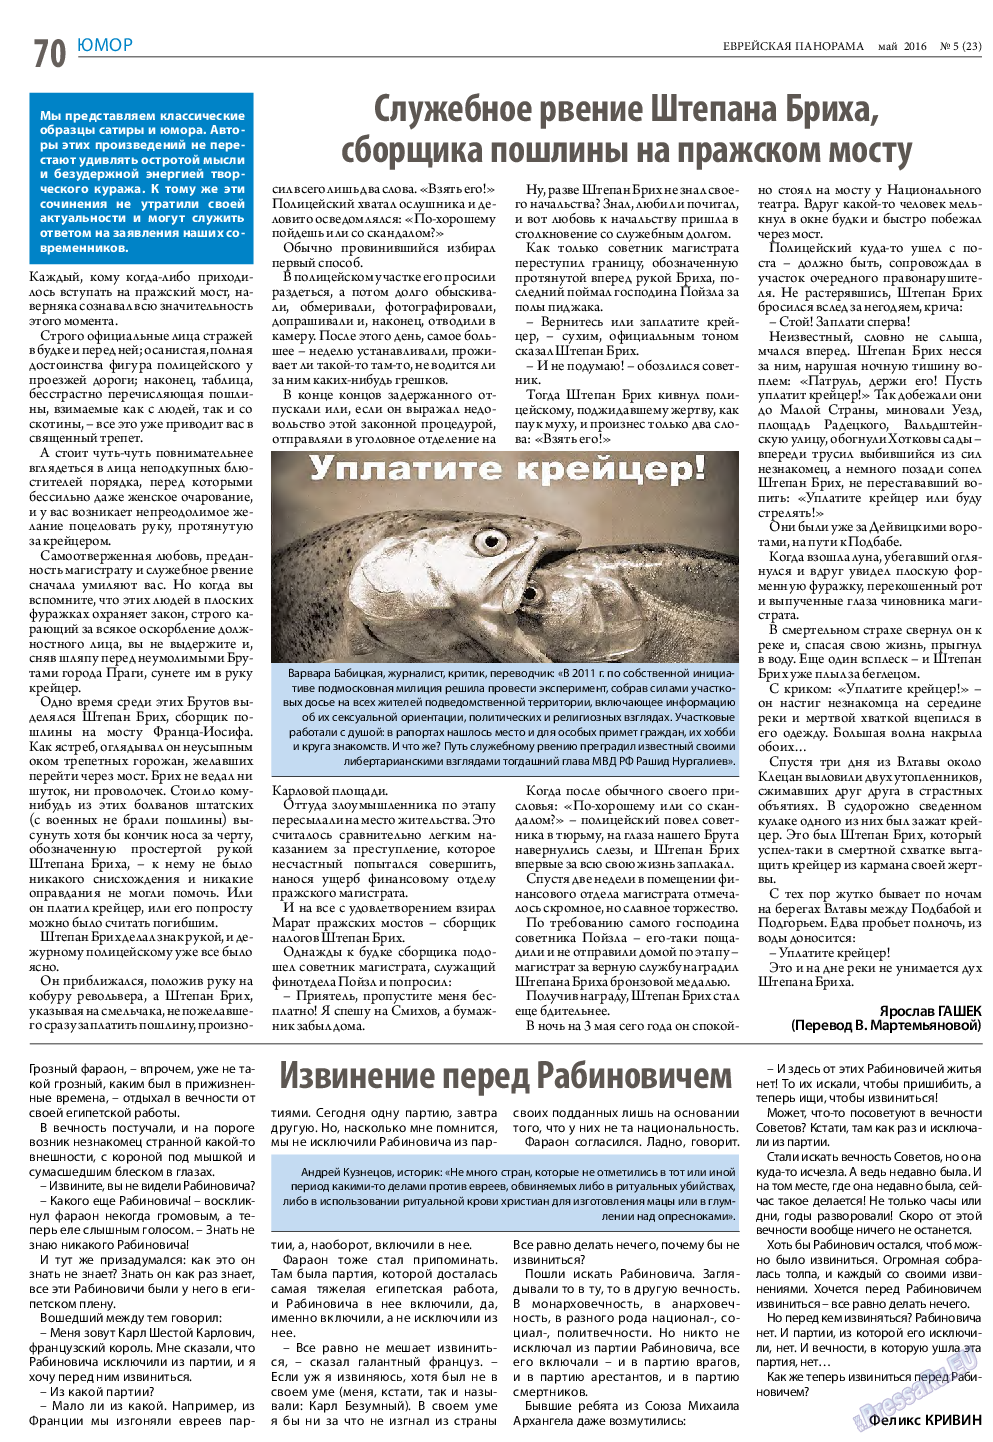 Еврейская панорама, газета. 2016 №5 стр.70